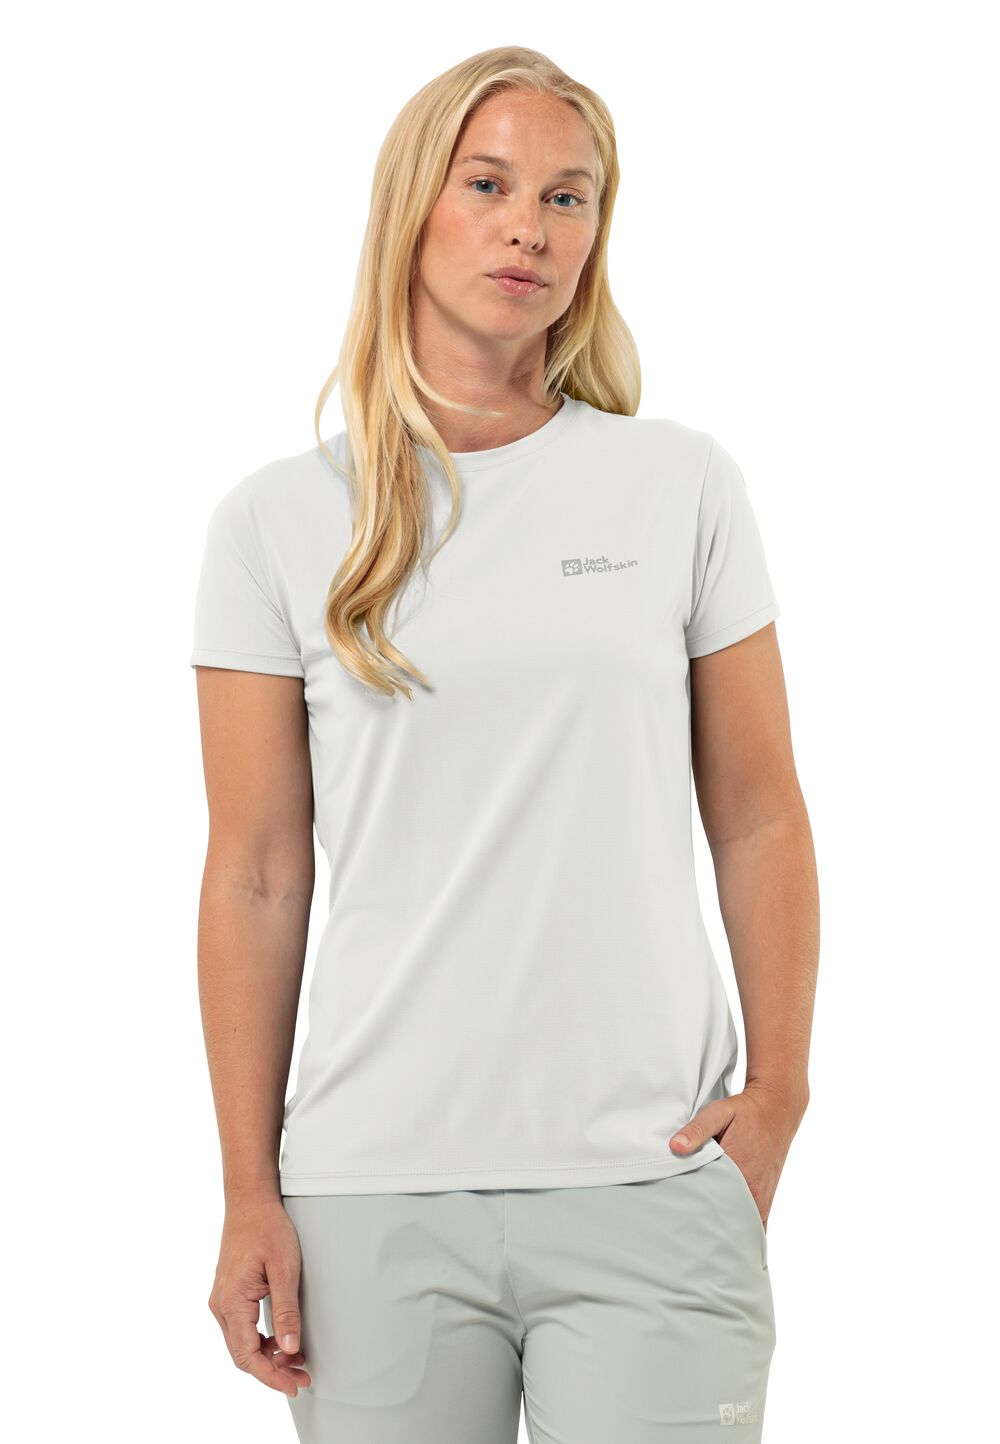 Jack Wolfskin Prelight Trail T-Shirt Women Functioneel shirt Dames XL wit stark white